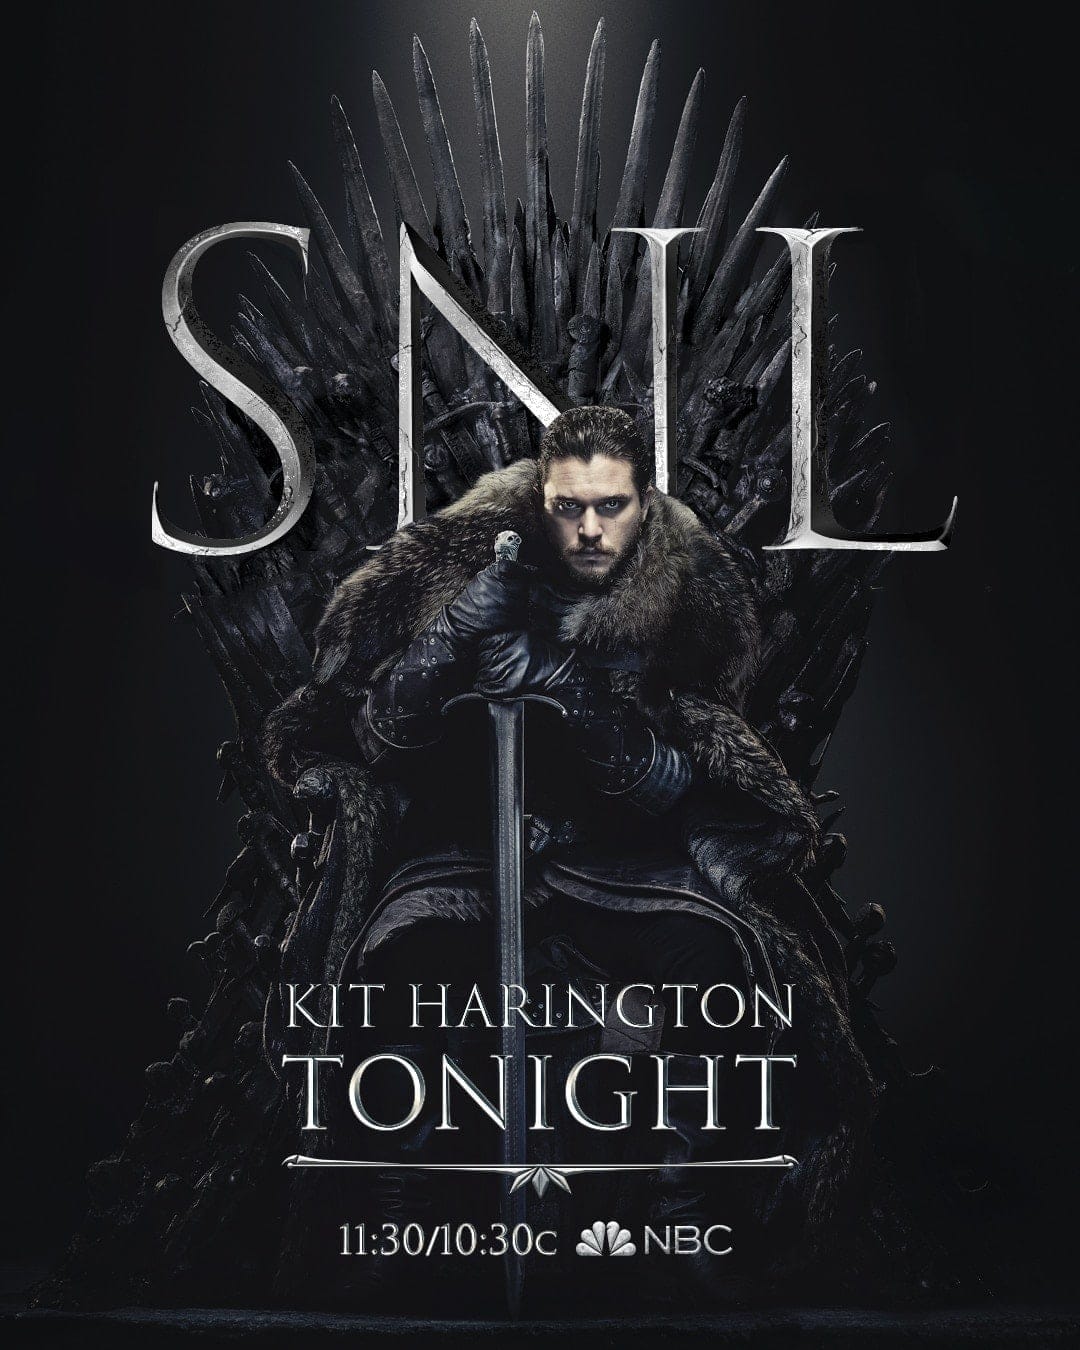 Jon Snow sitting on the Iron Thone with SNL behind him